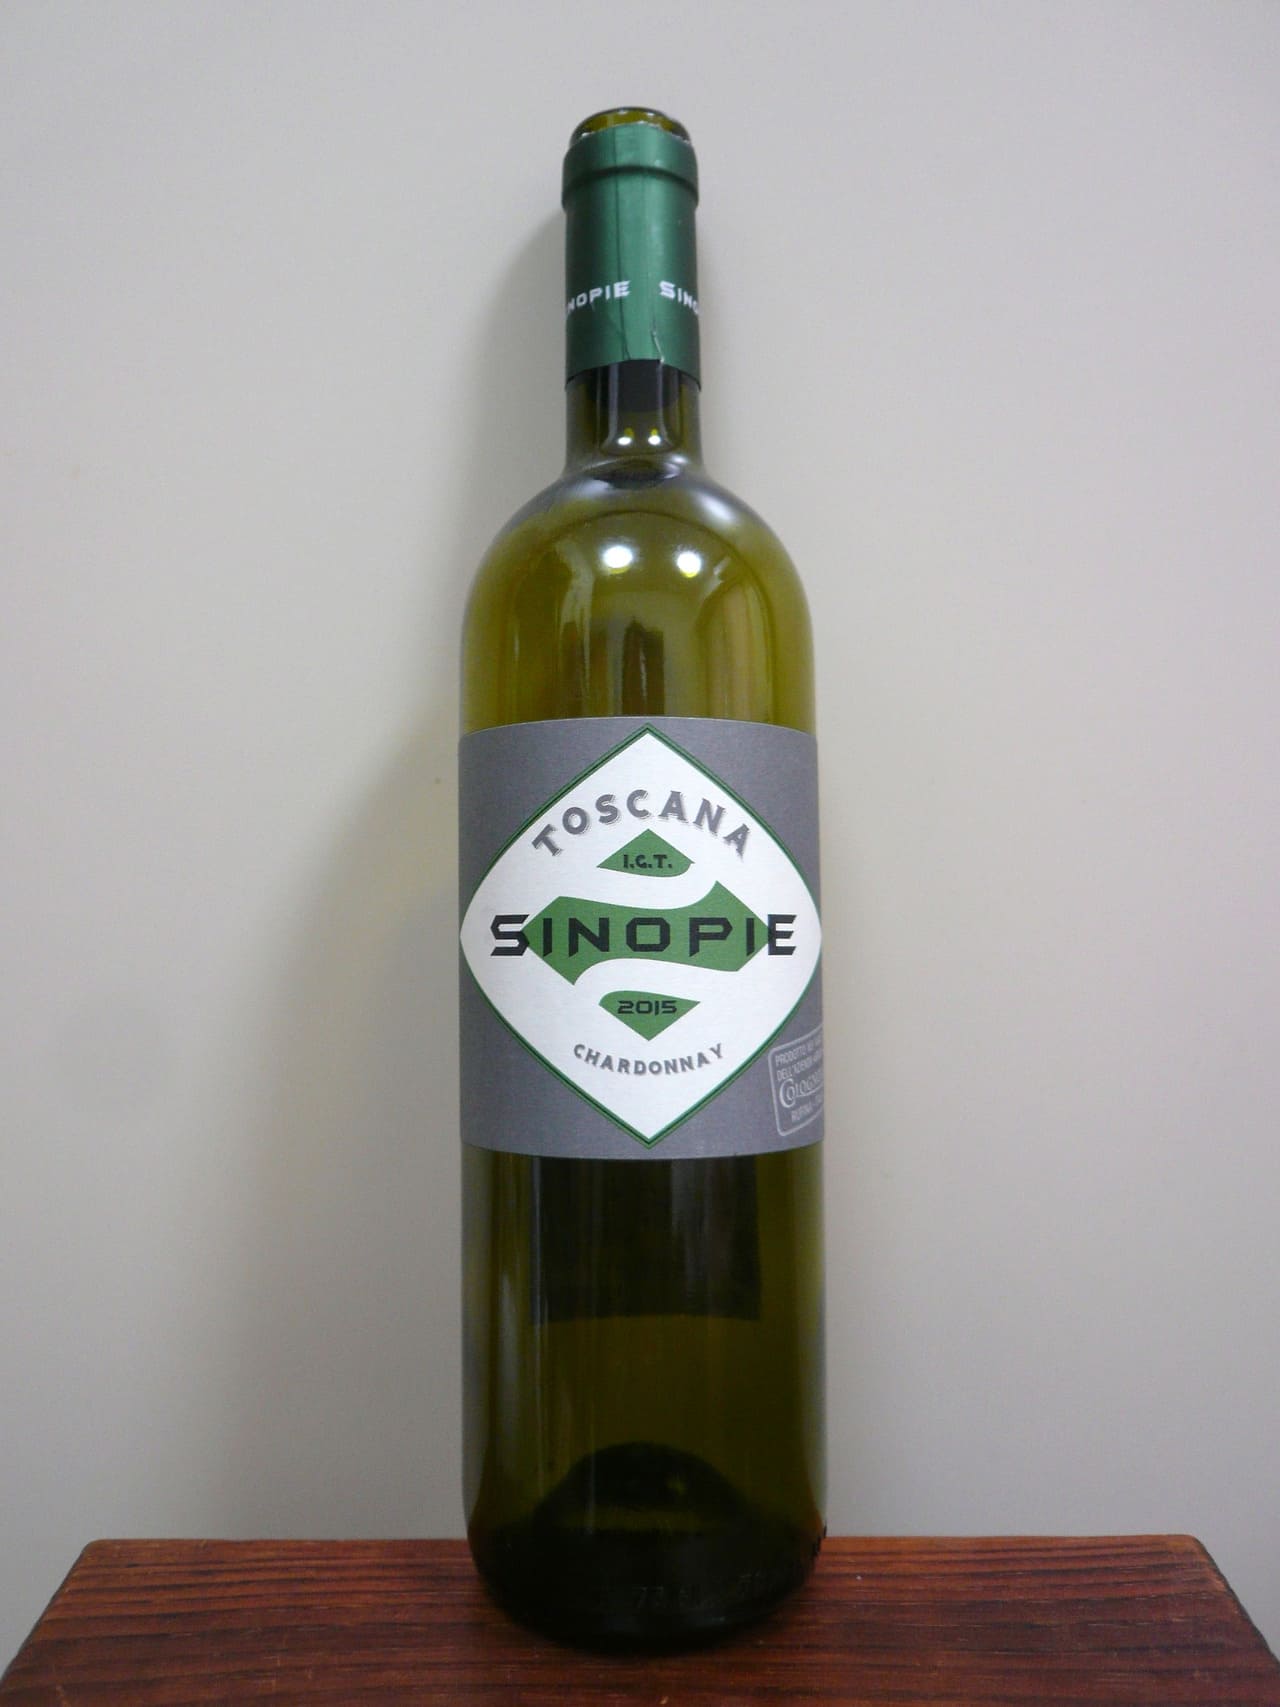 Colognole Sinopie Chardonnay